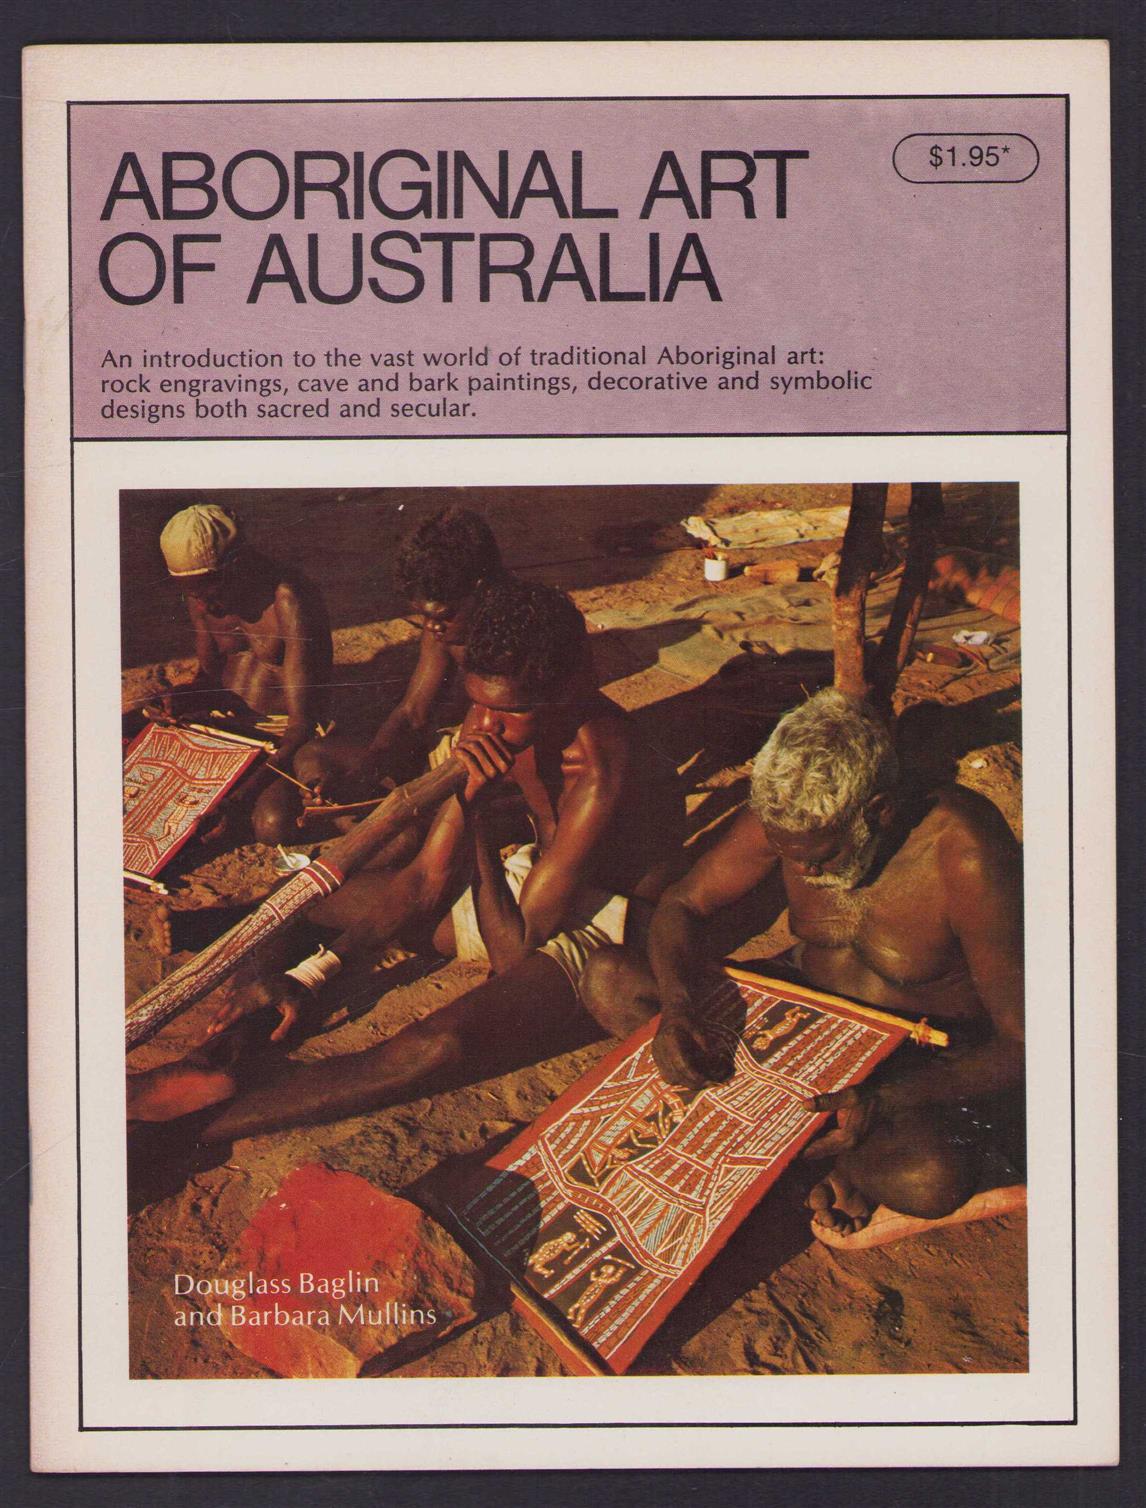 Douglass Baglin - Aboriginal art of Australia: an introduction to the vast world of traditional Aboriginal art